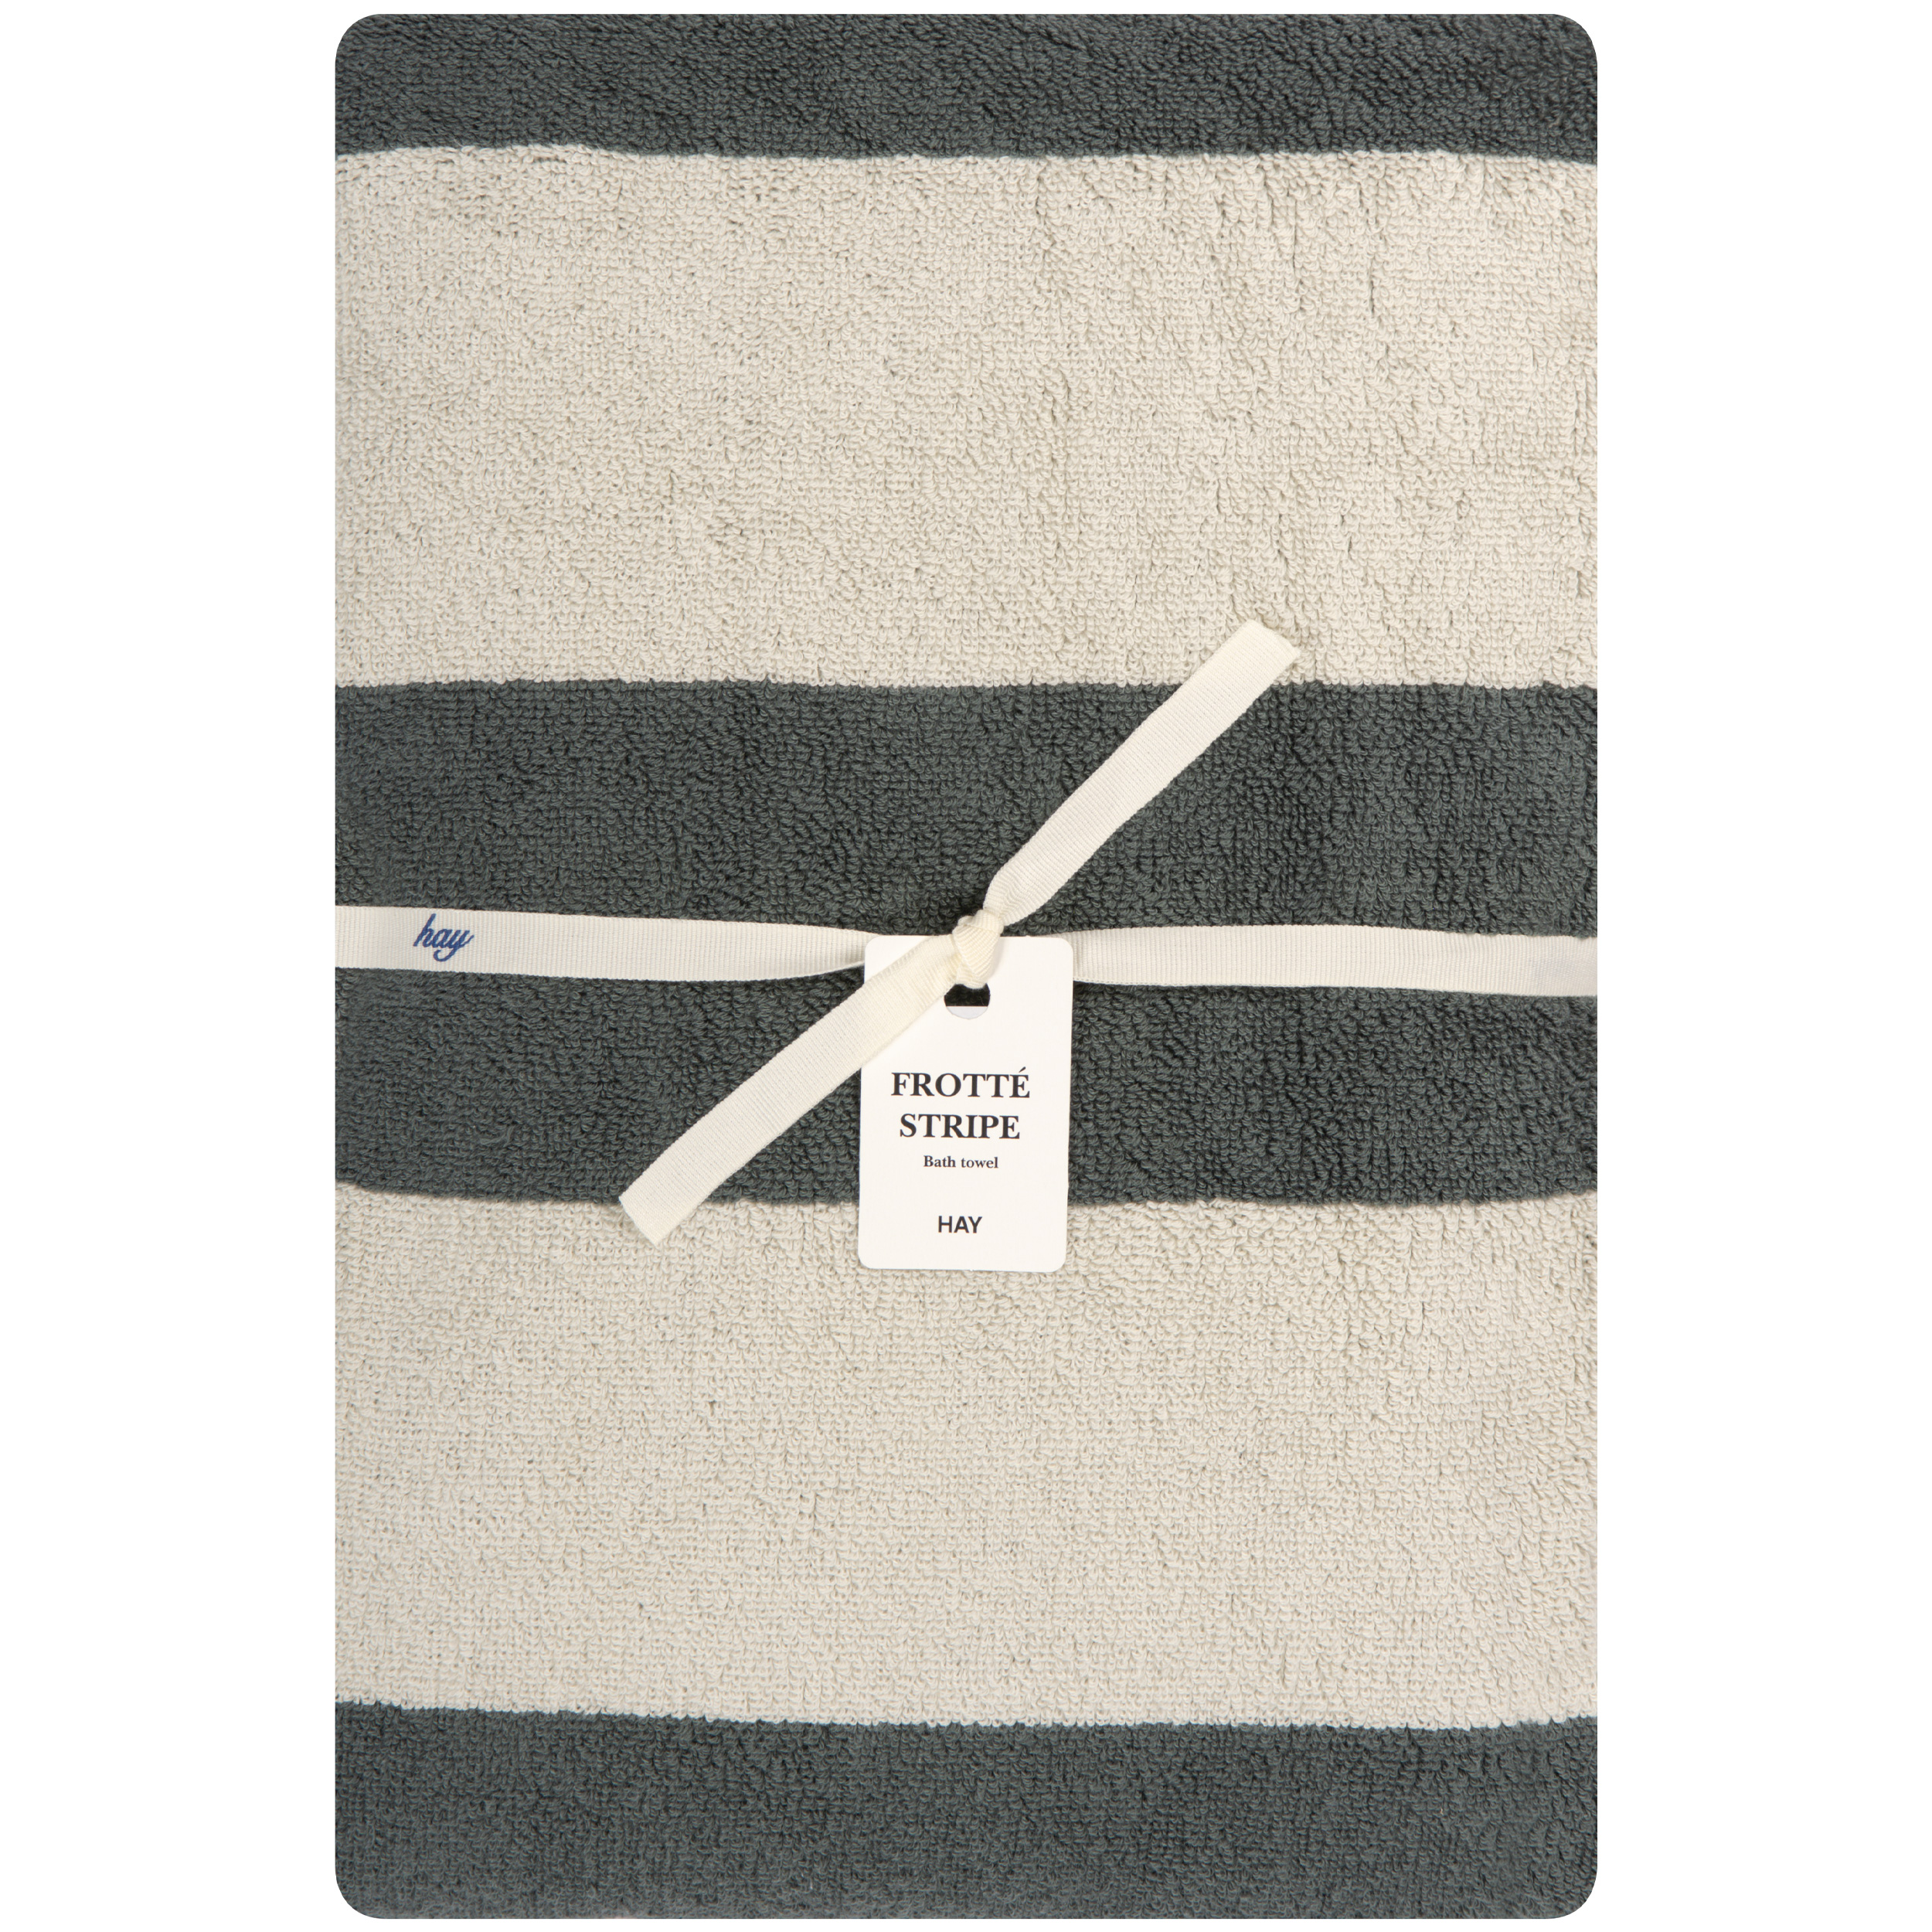 HAY ’Frotte’ Striped Bath Towel Dark Green